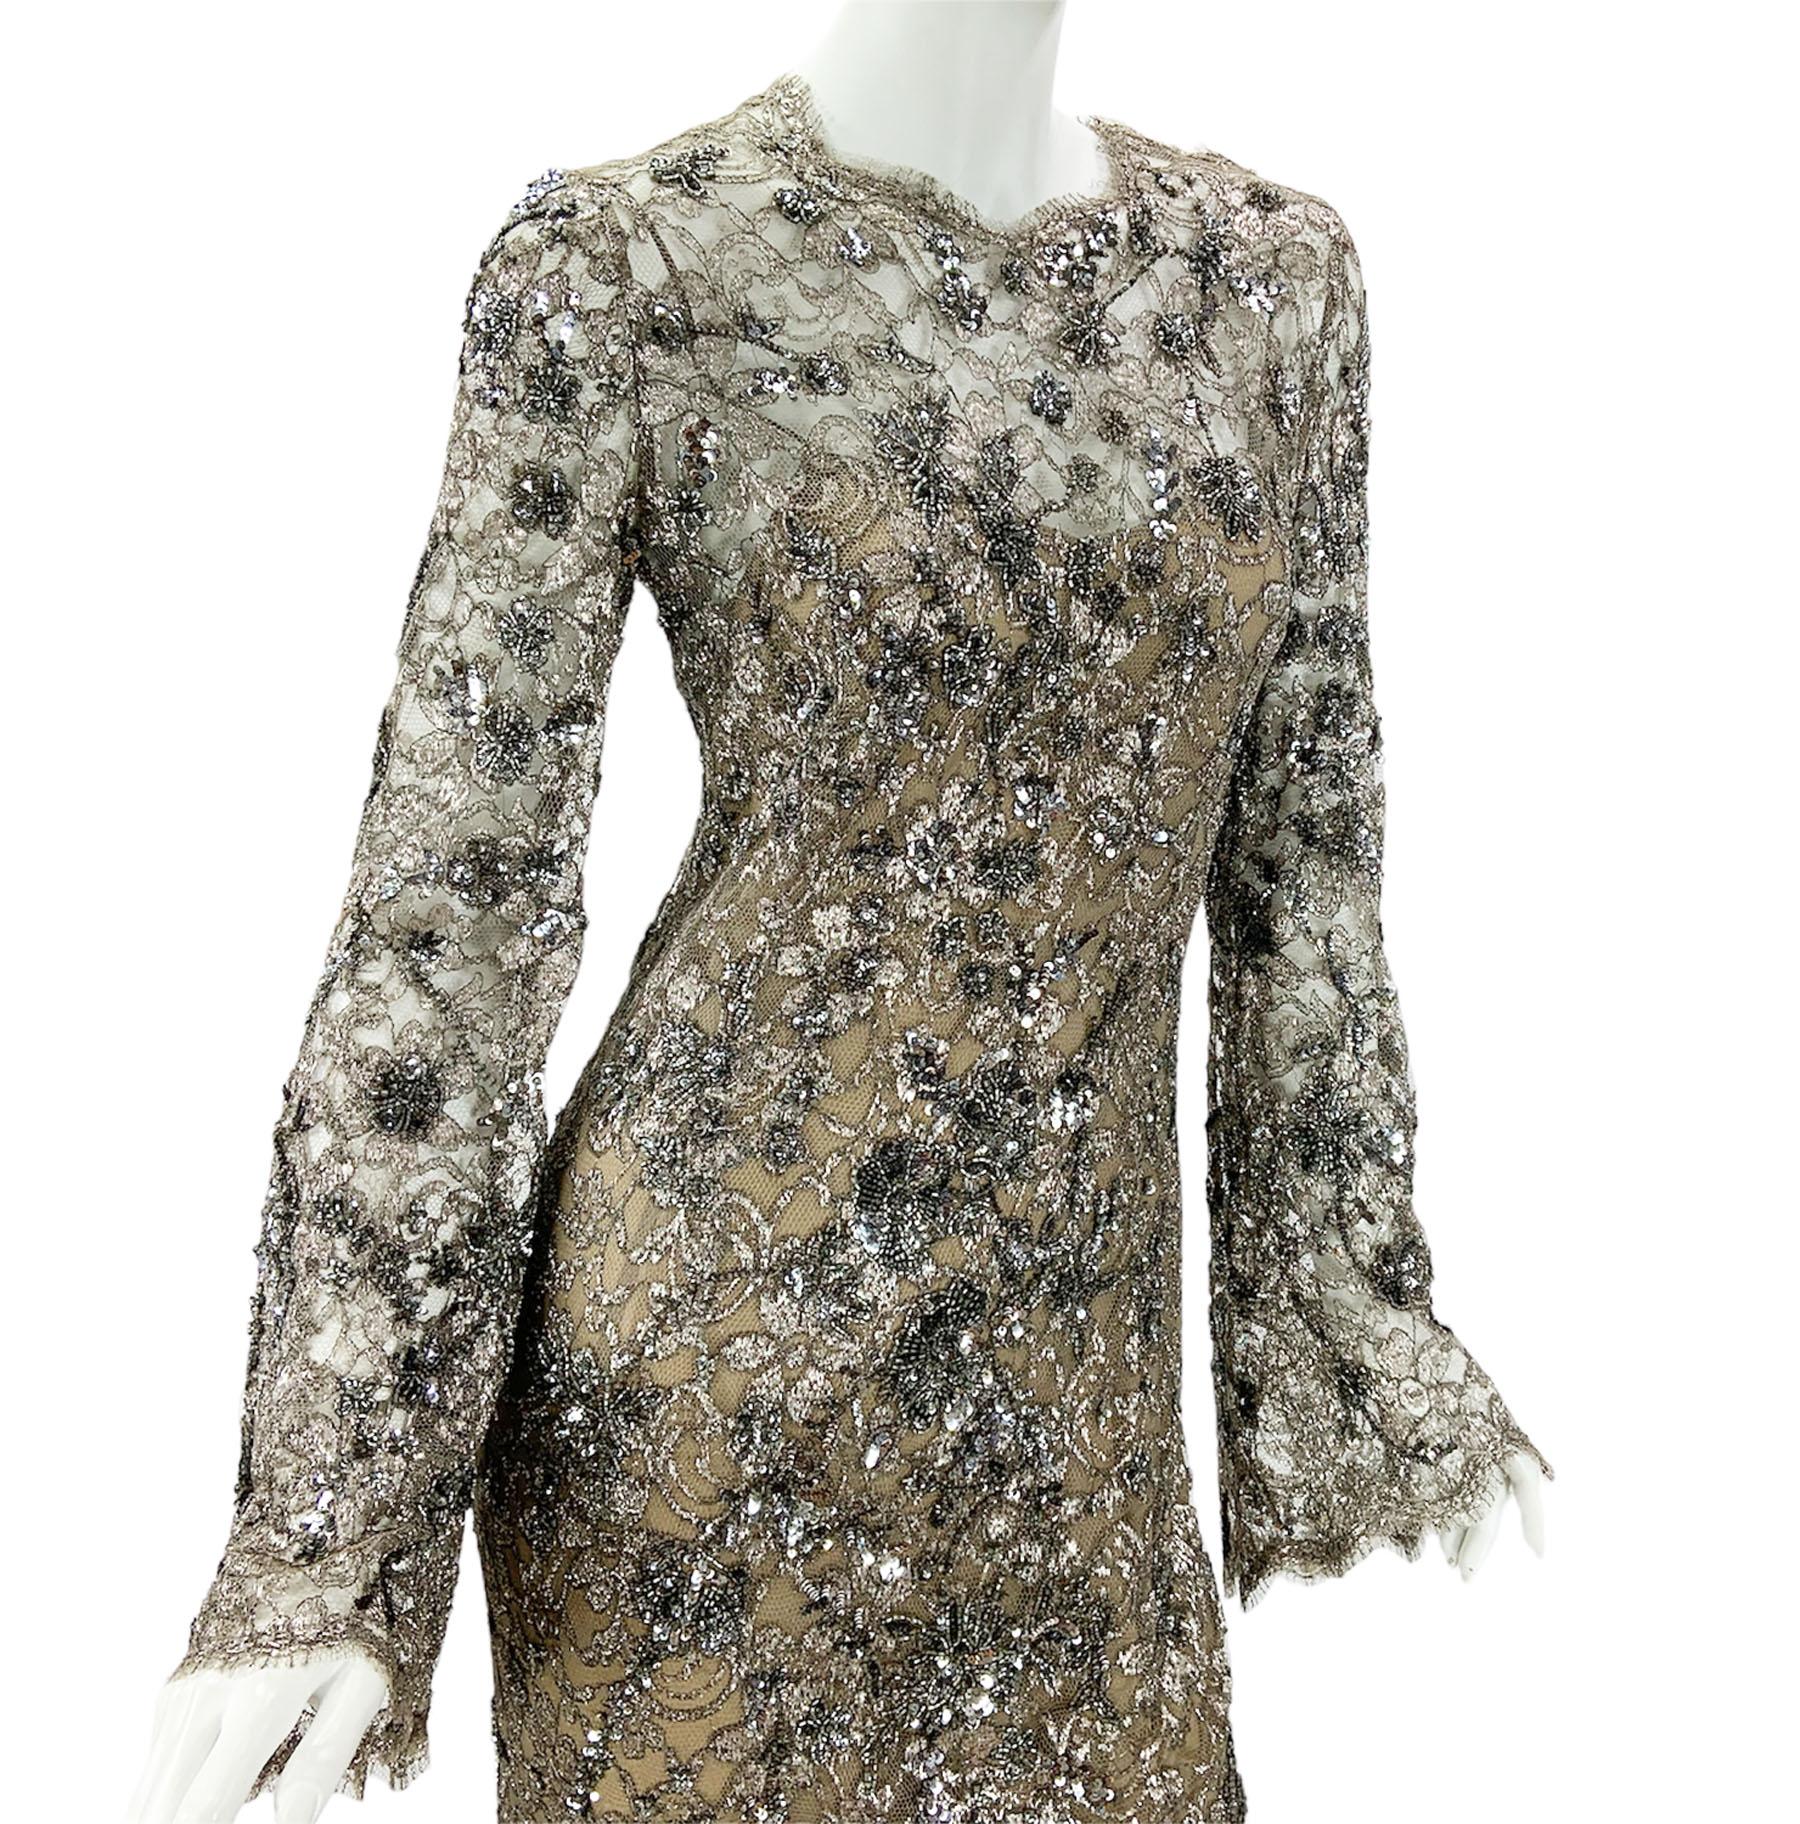 Vintage Oscar de la Renta Fully Embellished Smoky Gray Lace Dress Gown  5